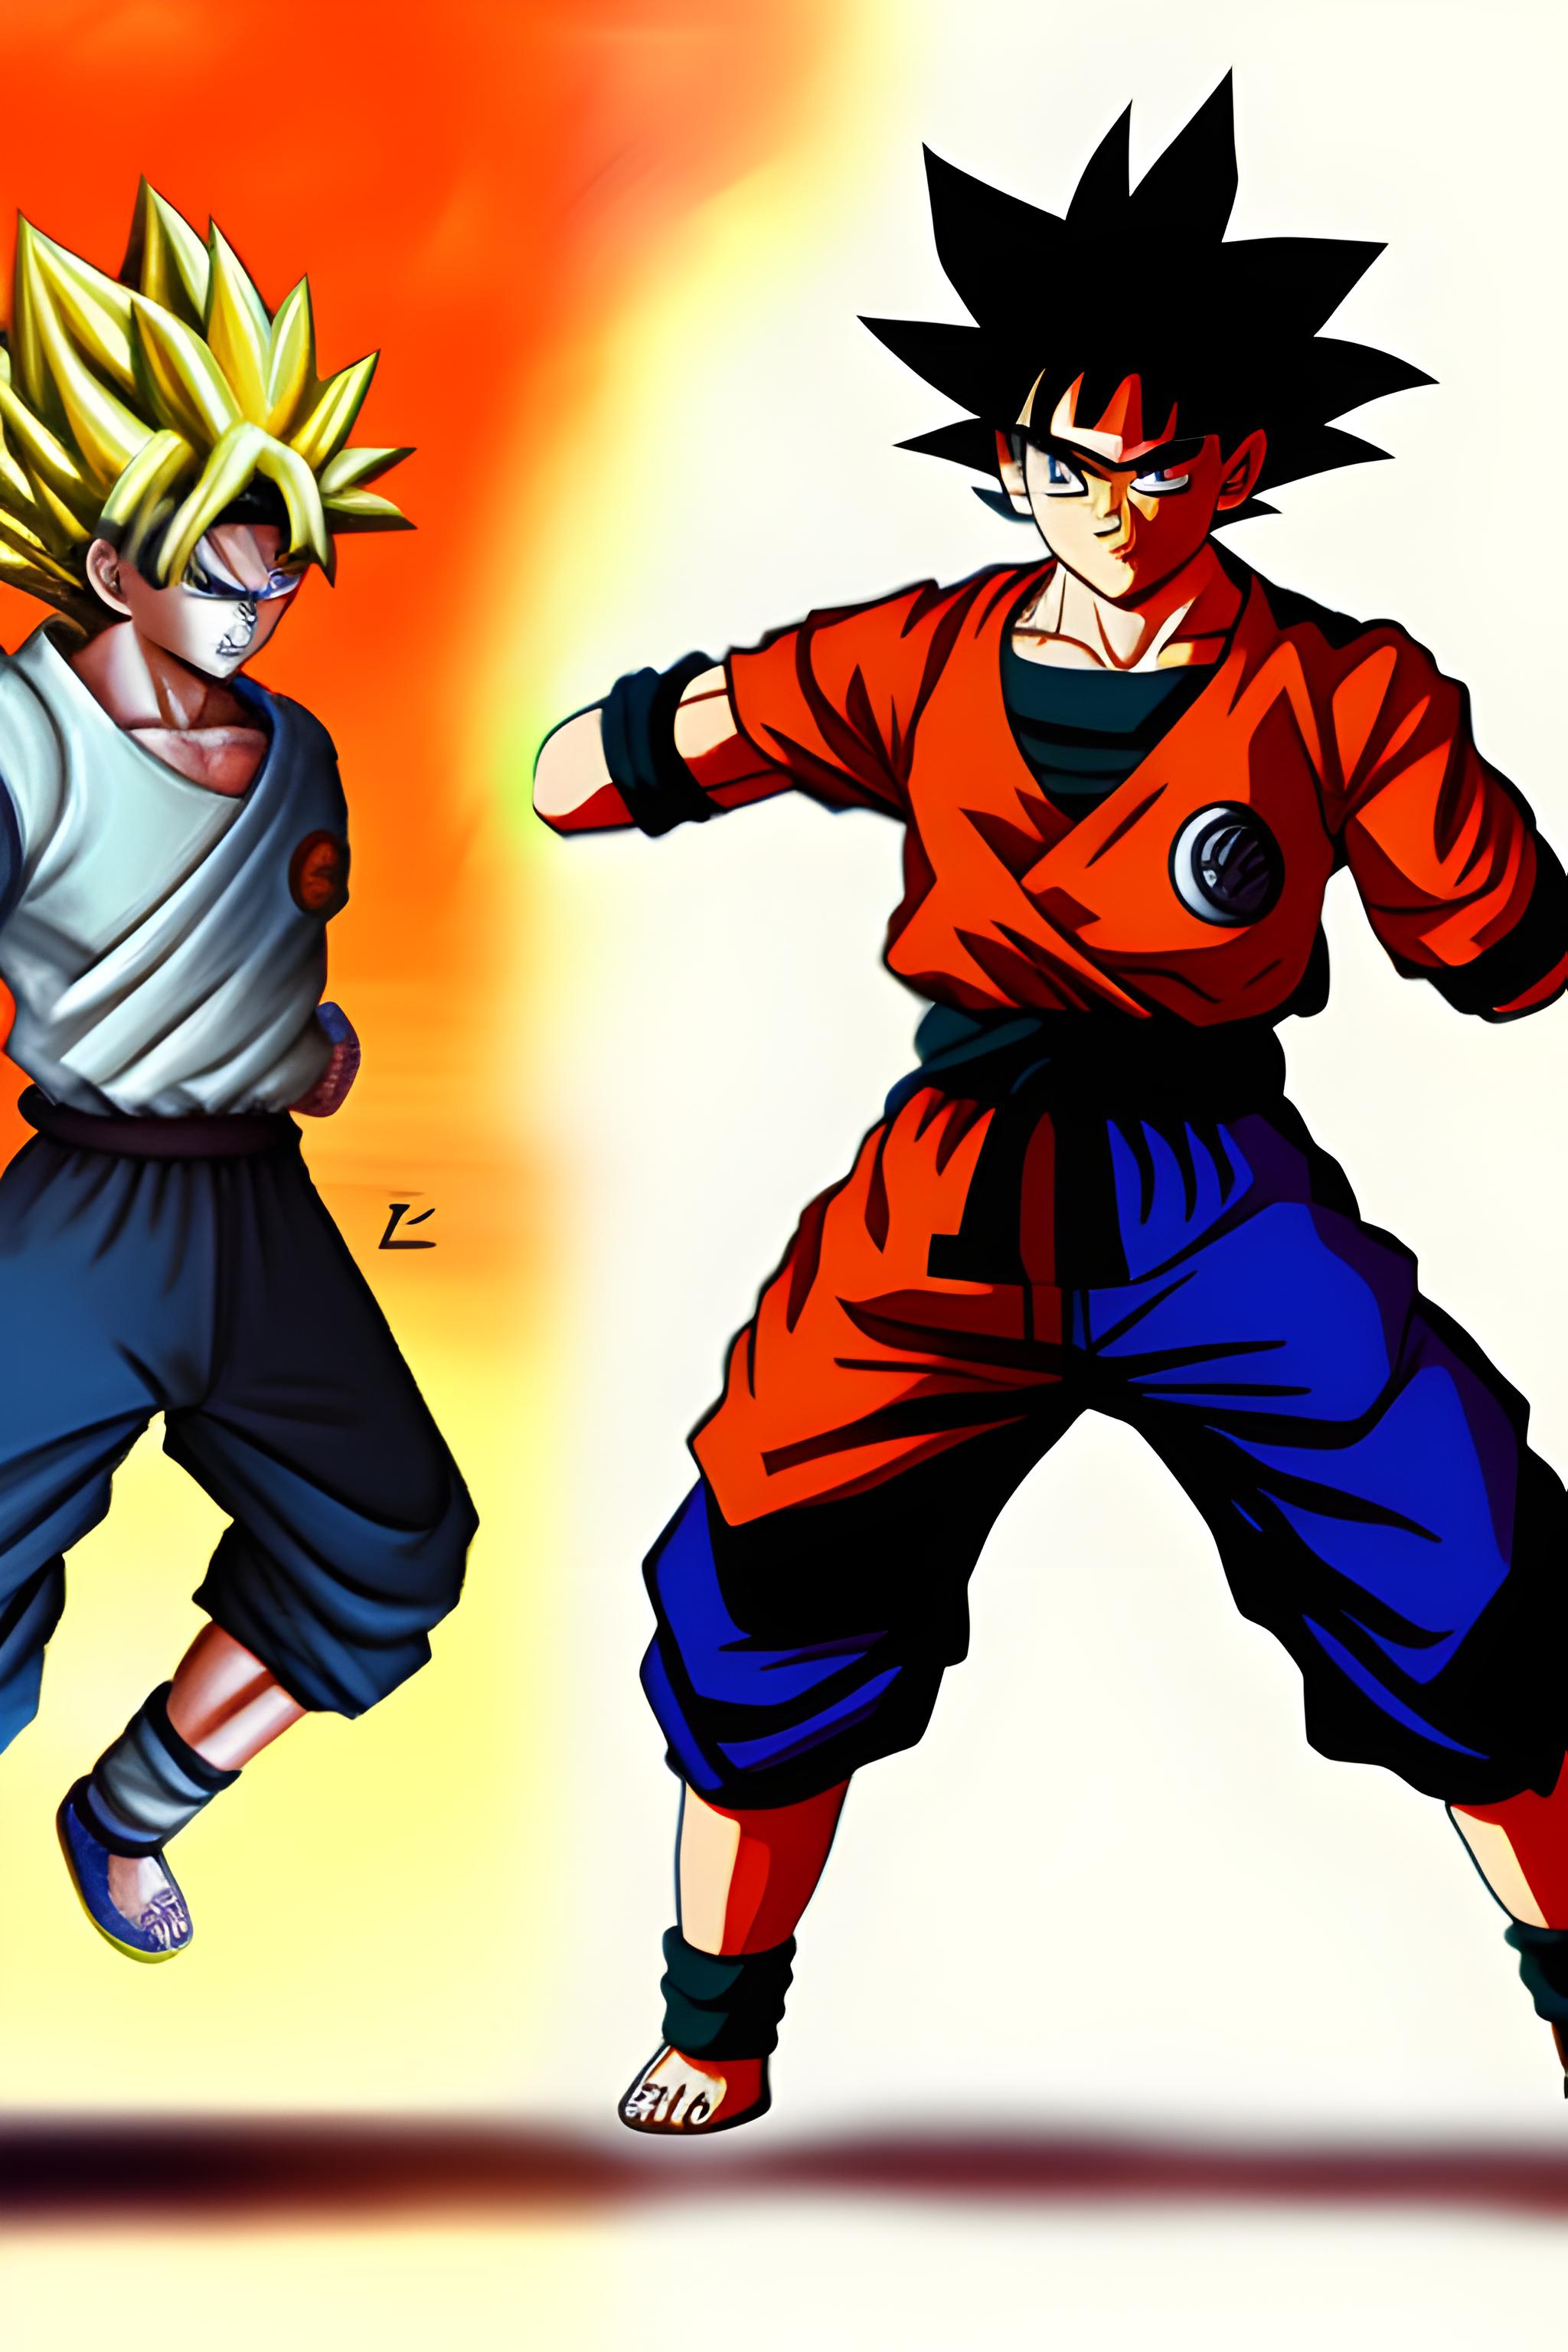 Goku vs naruto | Wallpapers.ai